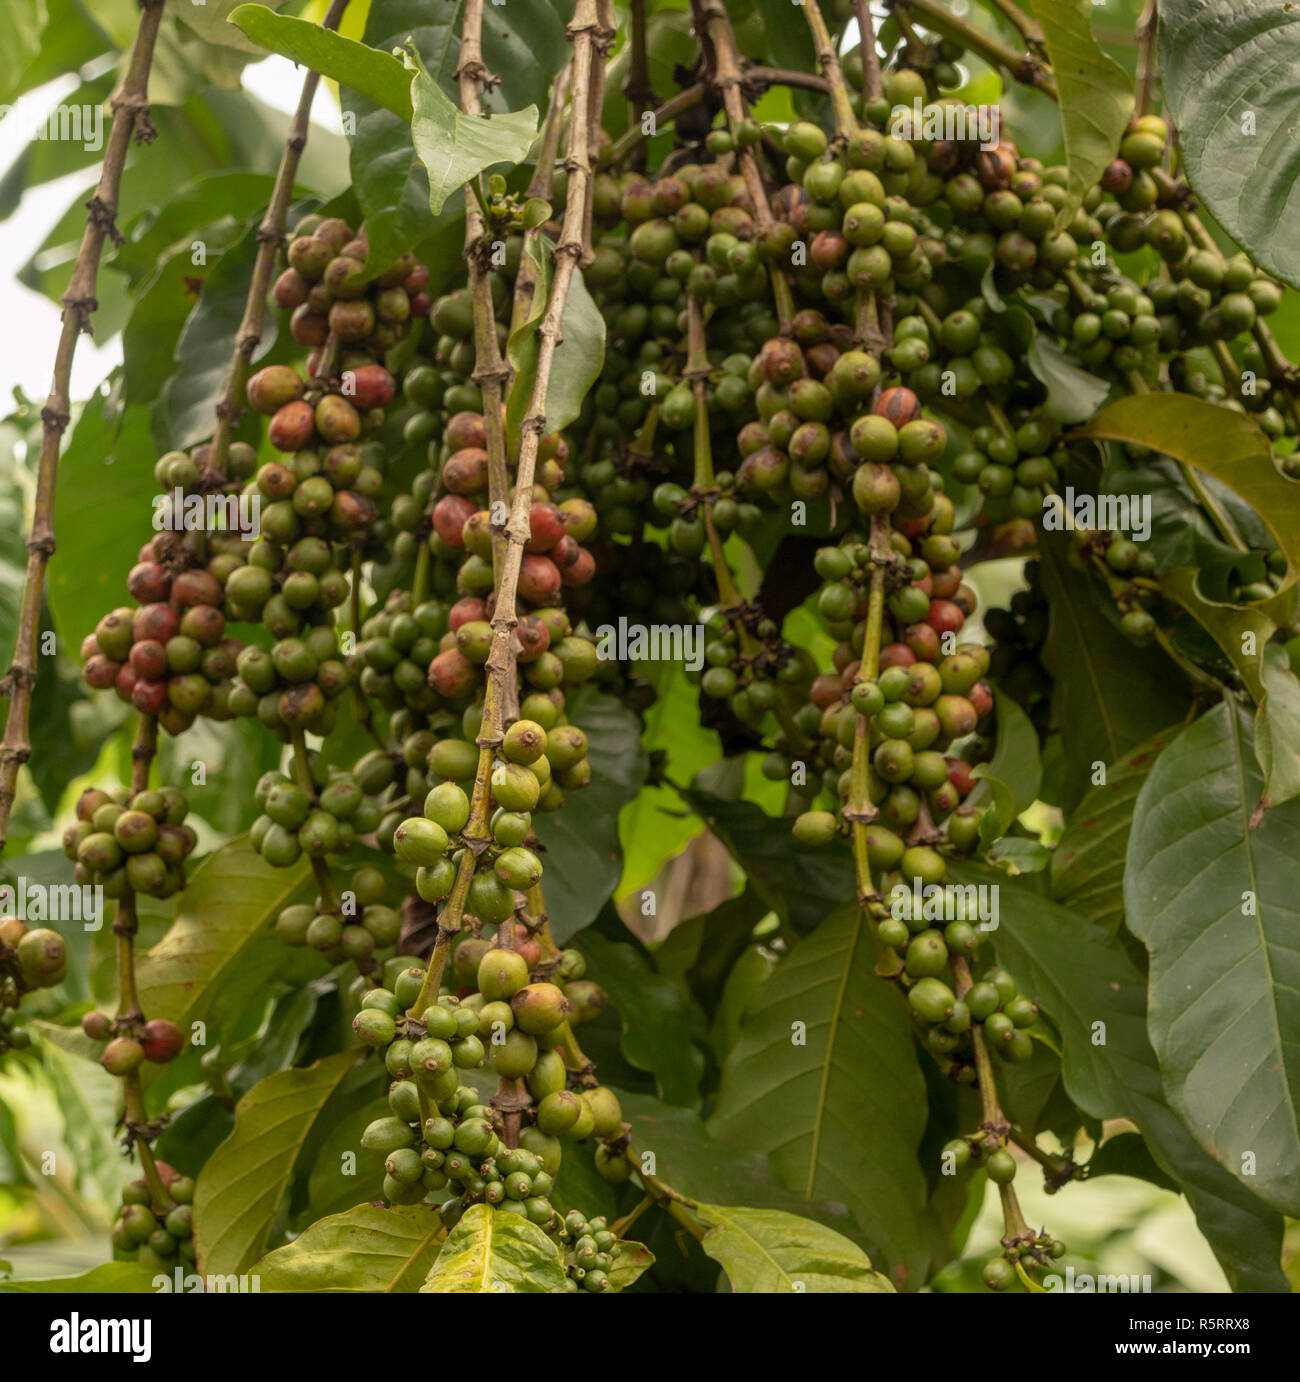 Robusta coffee beans growing on tree, Bogodi, Uganda, Africa Stock Photo